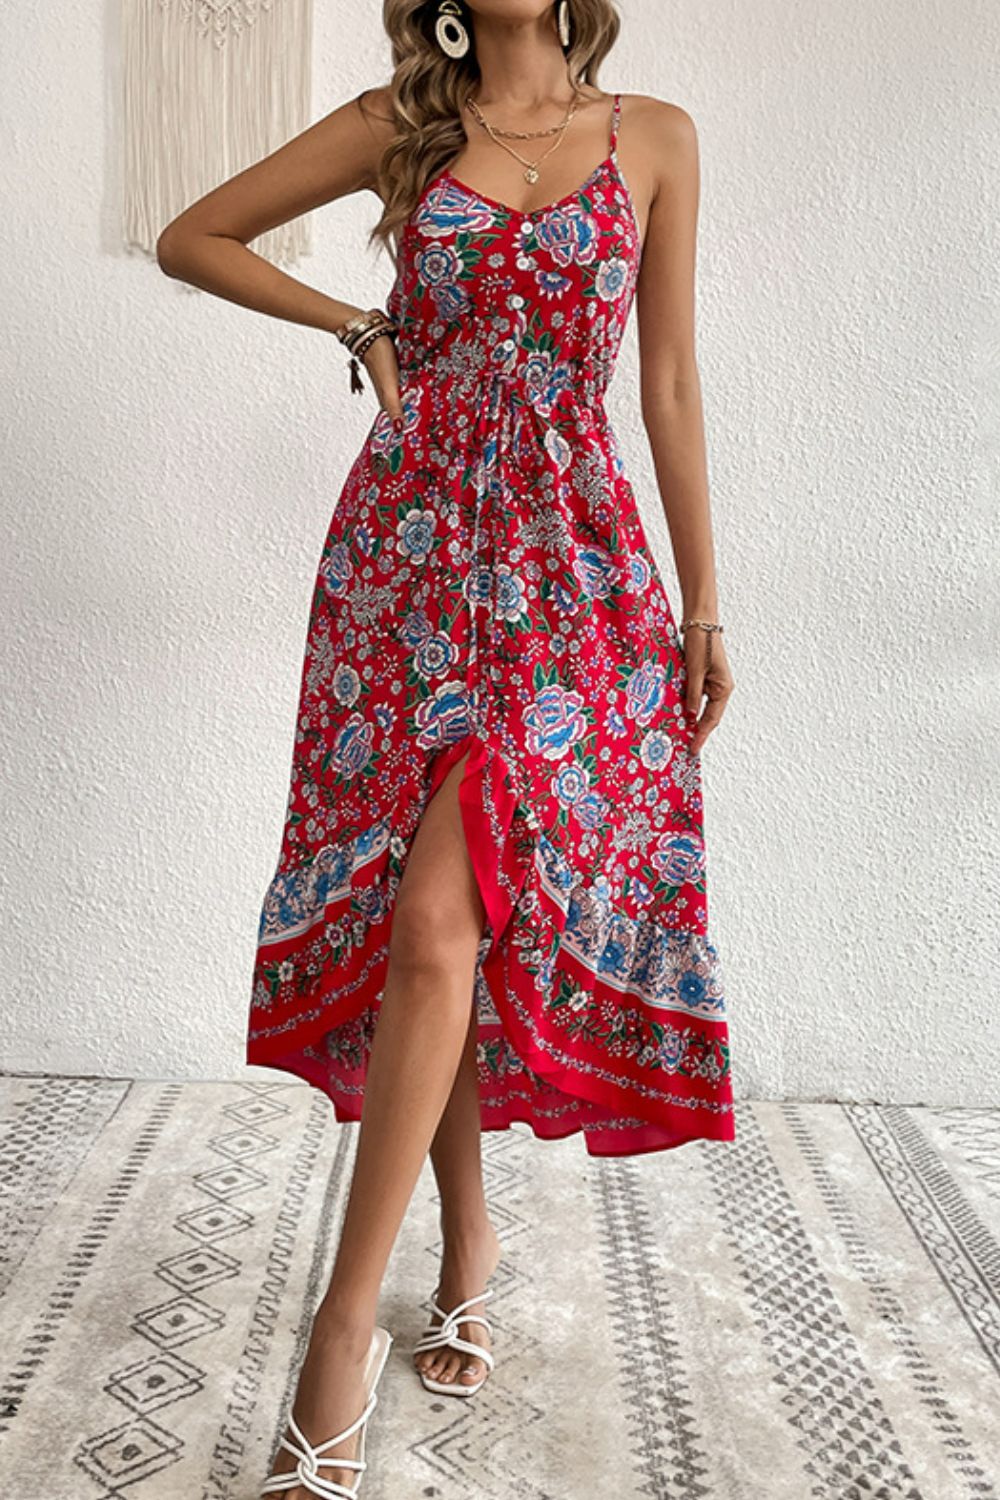 Bohemian Spaghetti Strap Dress with Decorative Buttons - Perfect Summer Beach Wedding Guest Dress for Women